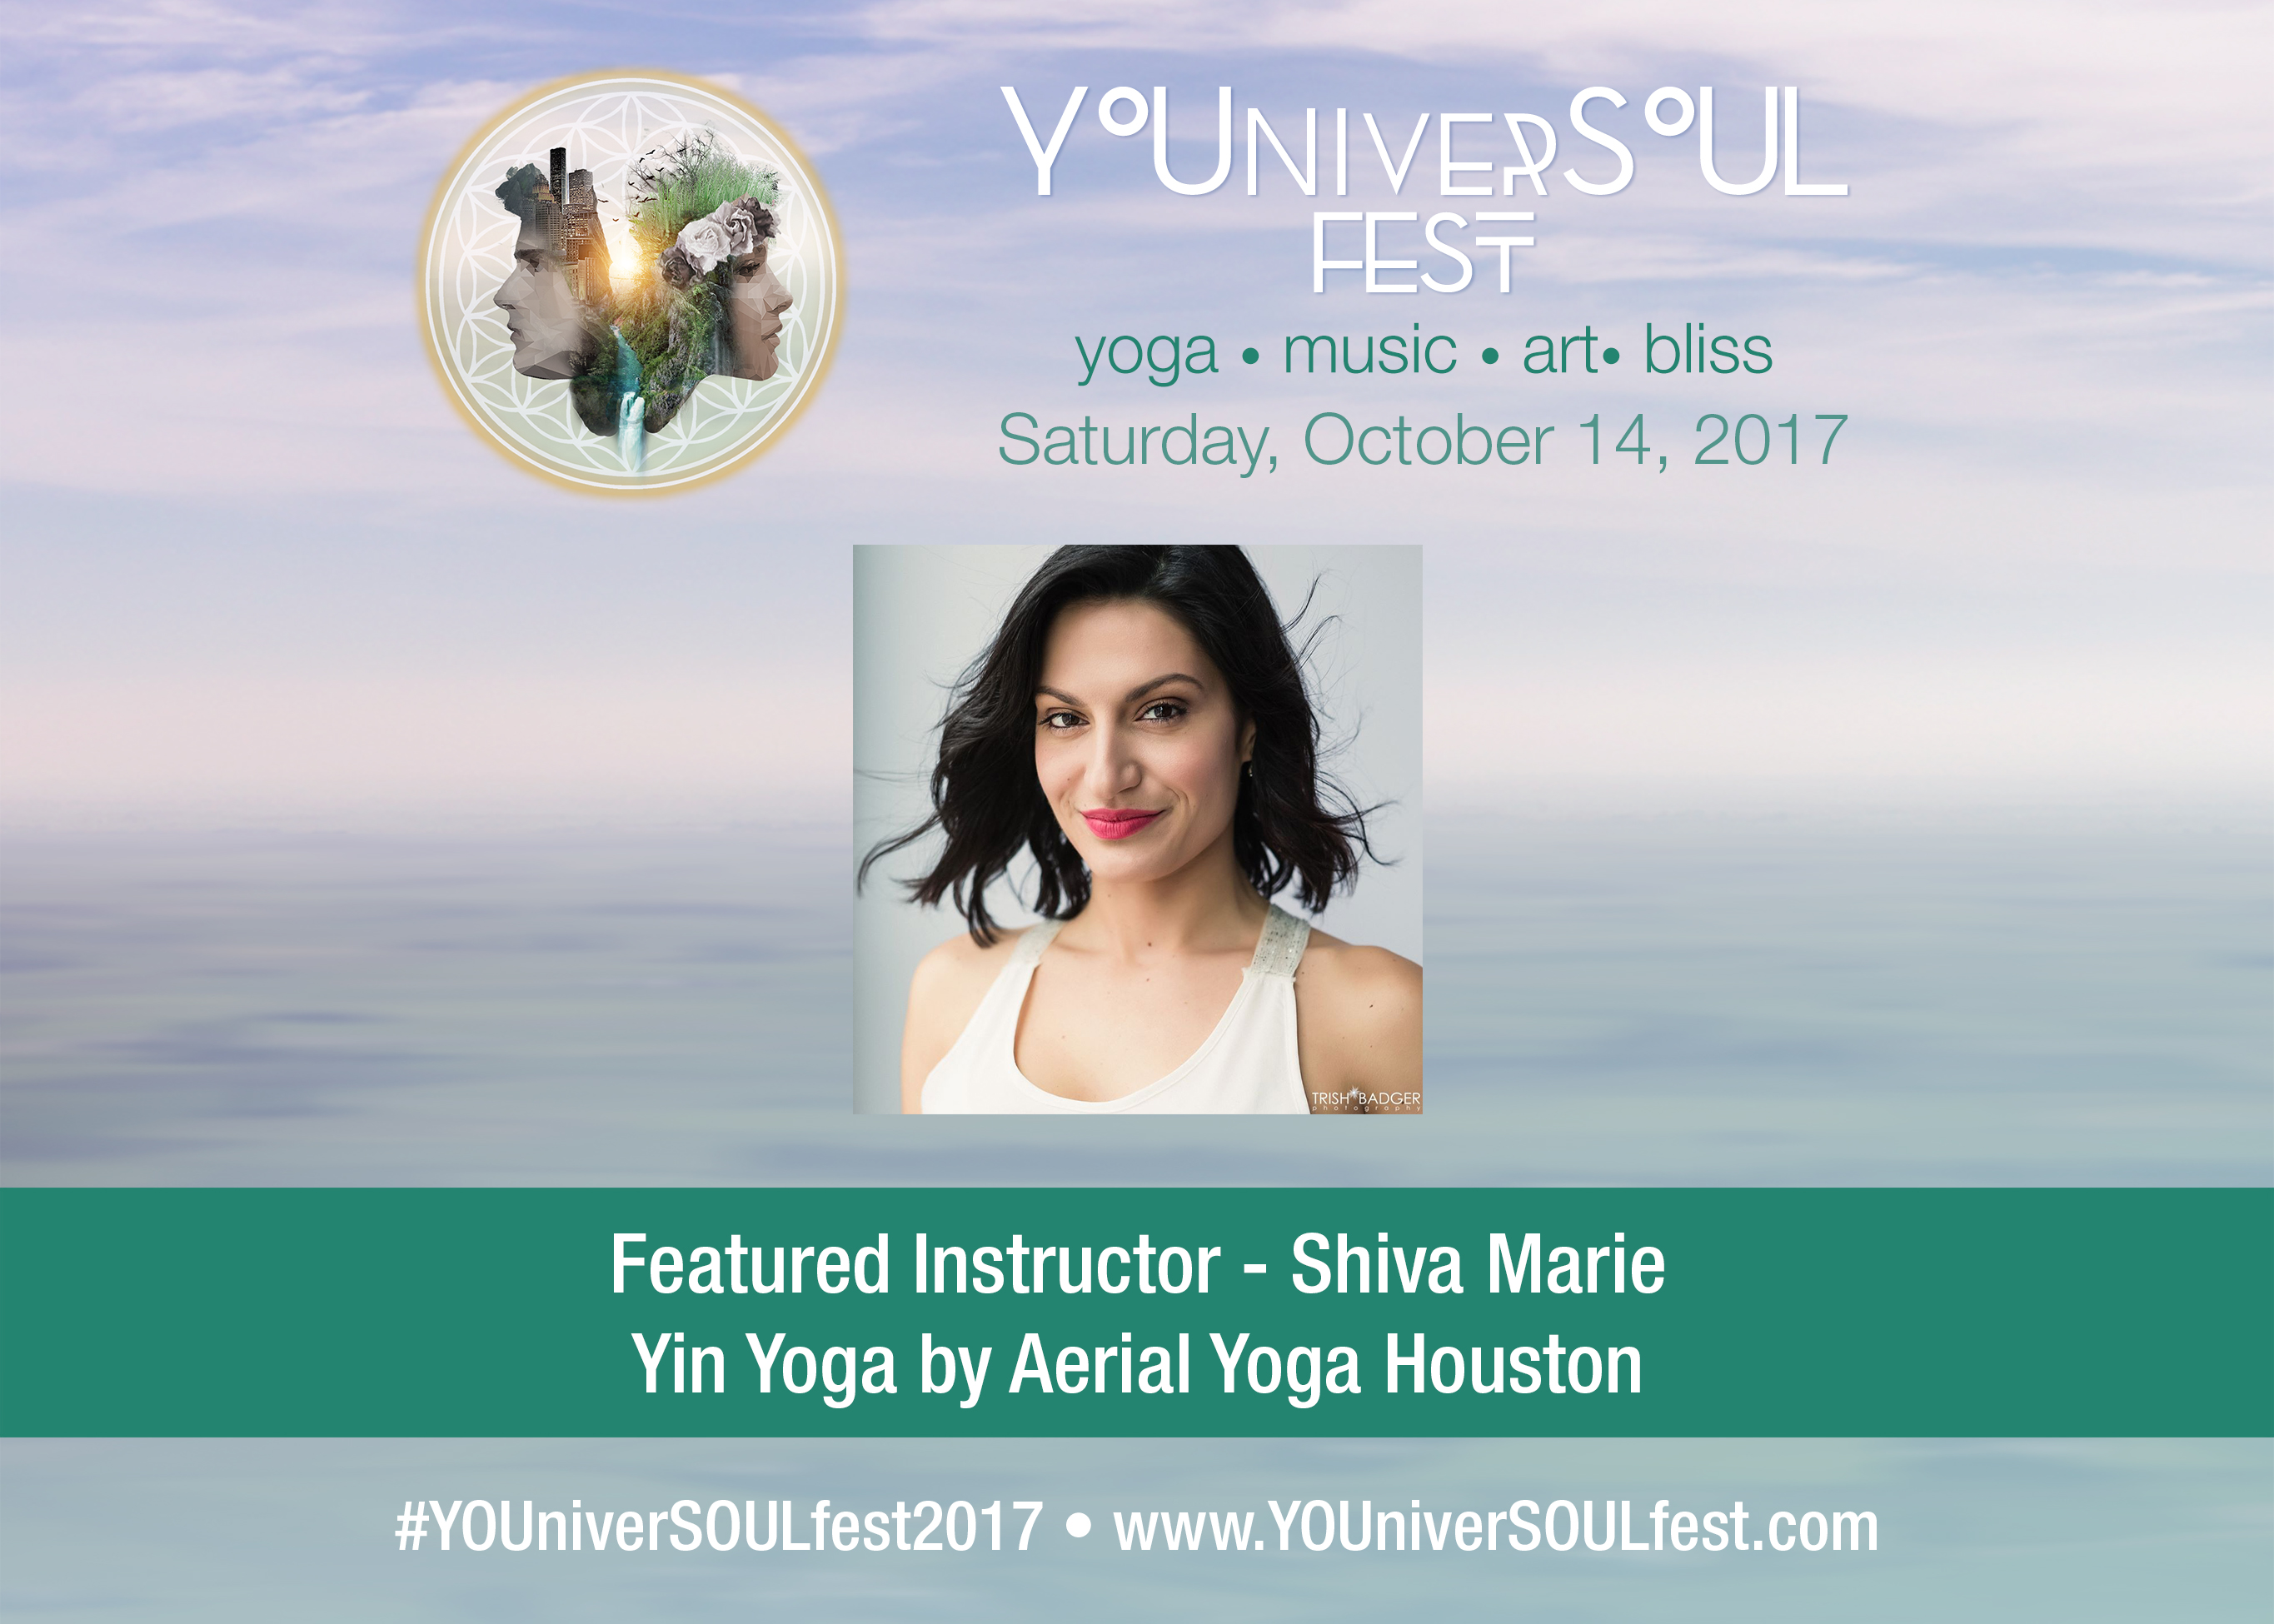 Yin Yoga by Aerial Yoga Houston featuring Shiva Marie